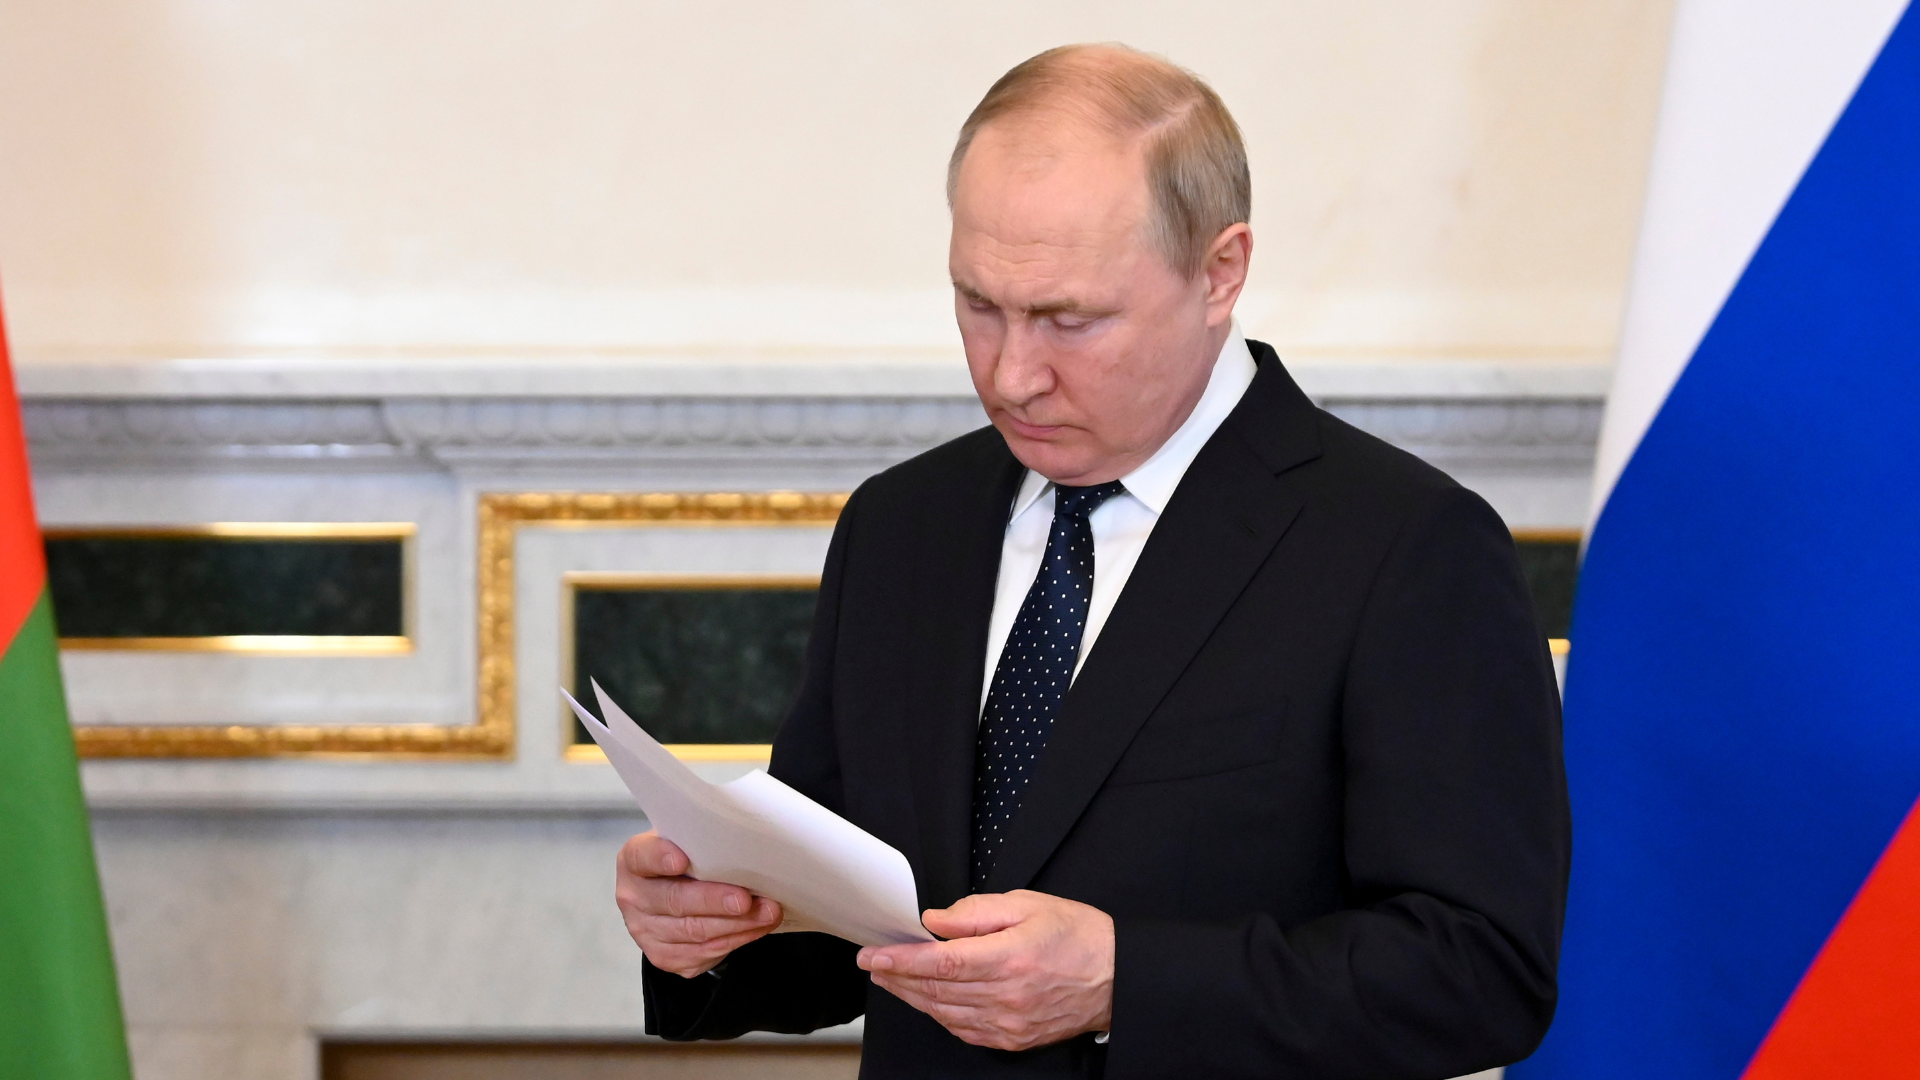 Putin prezerajúci si dokumenty